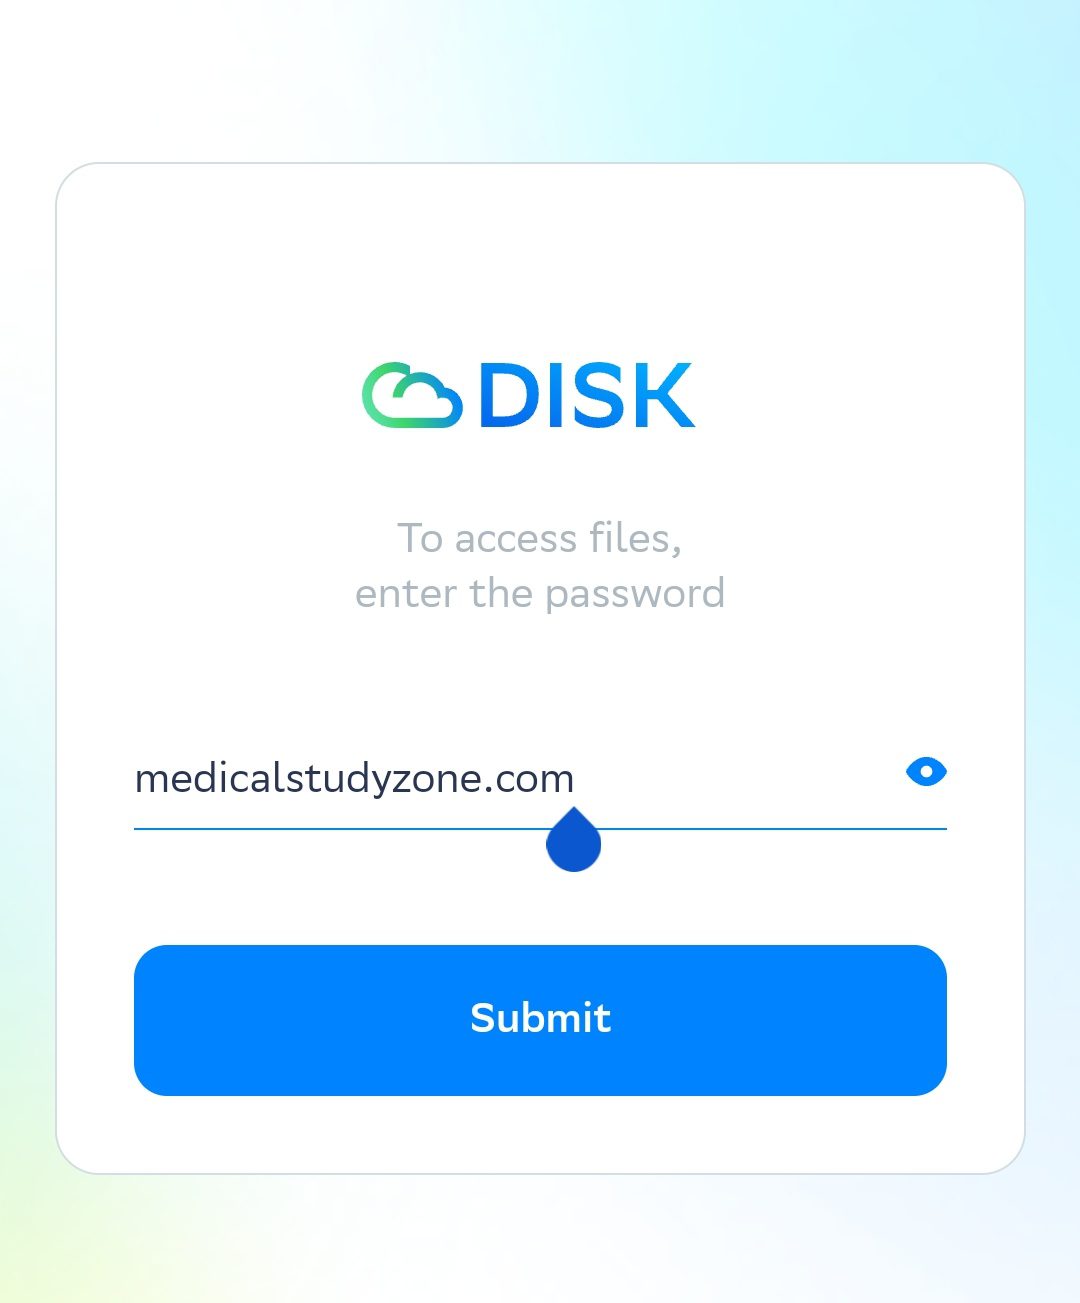 To Access Sber disk password medicalstudyzone.com